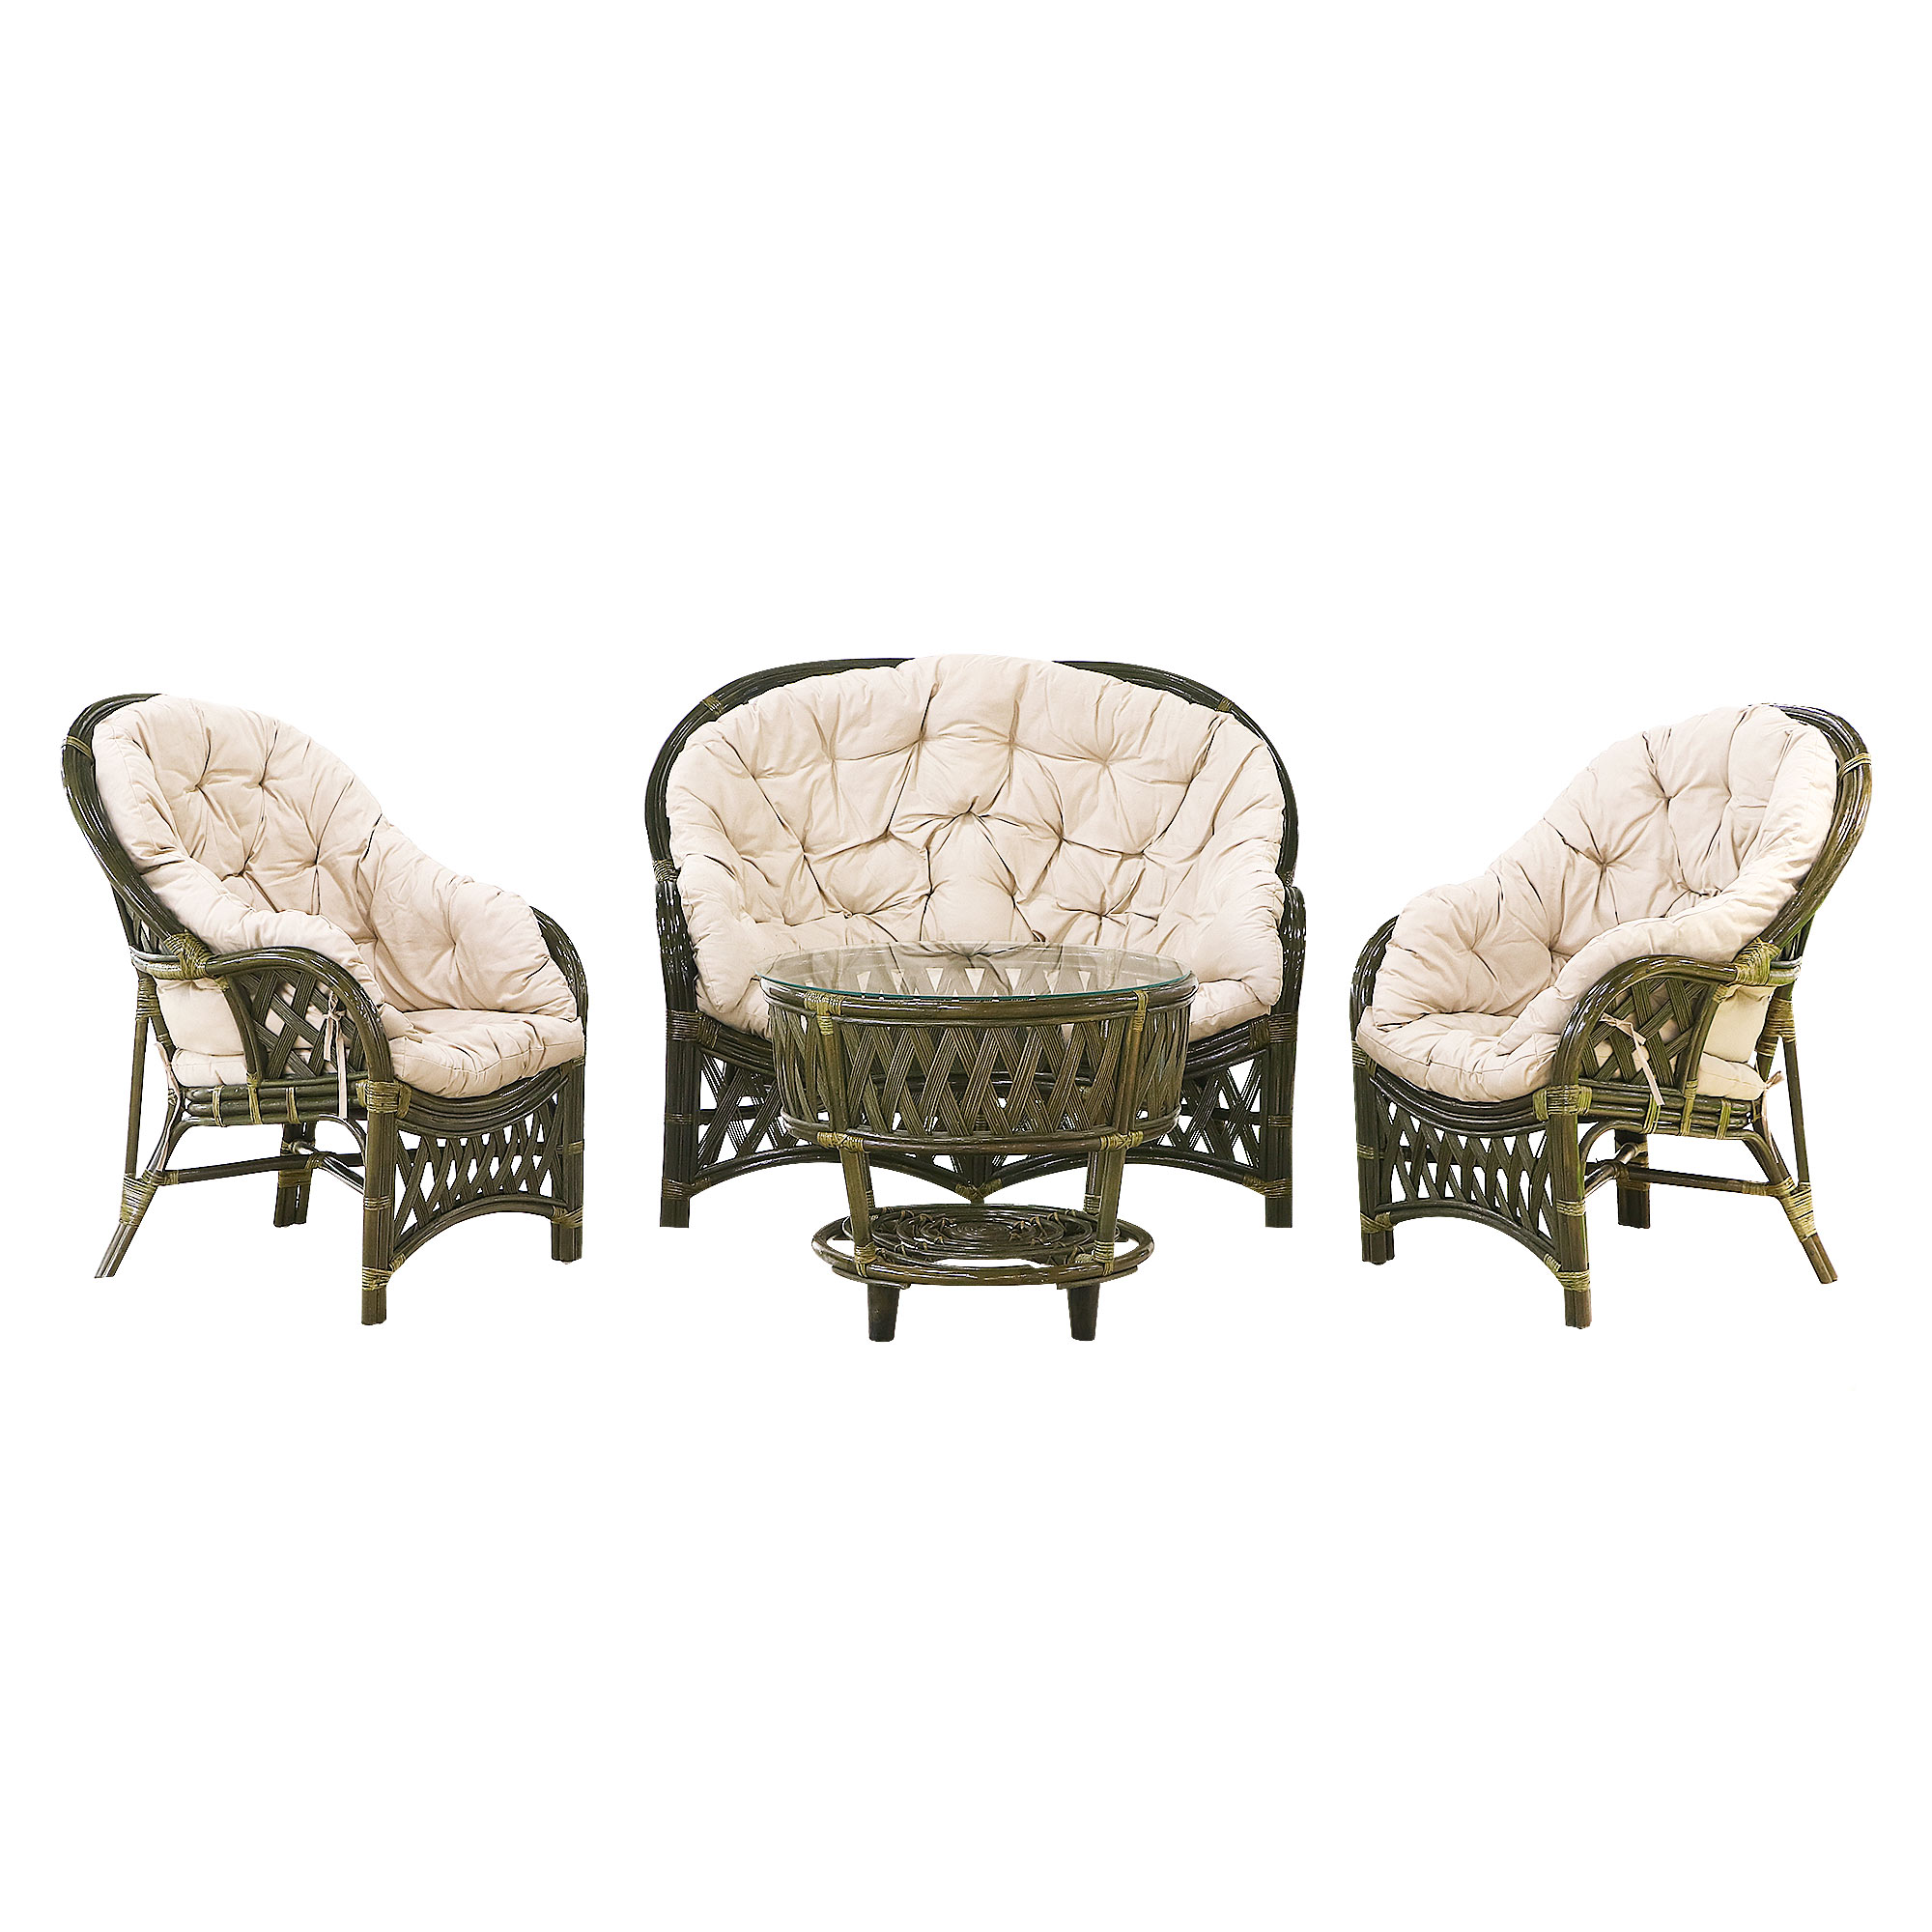 Комплект мебели Rattan grand amalfi olive: диван, стол, 2 кресла, цвет оливковый - фото 1